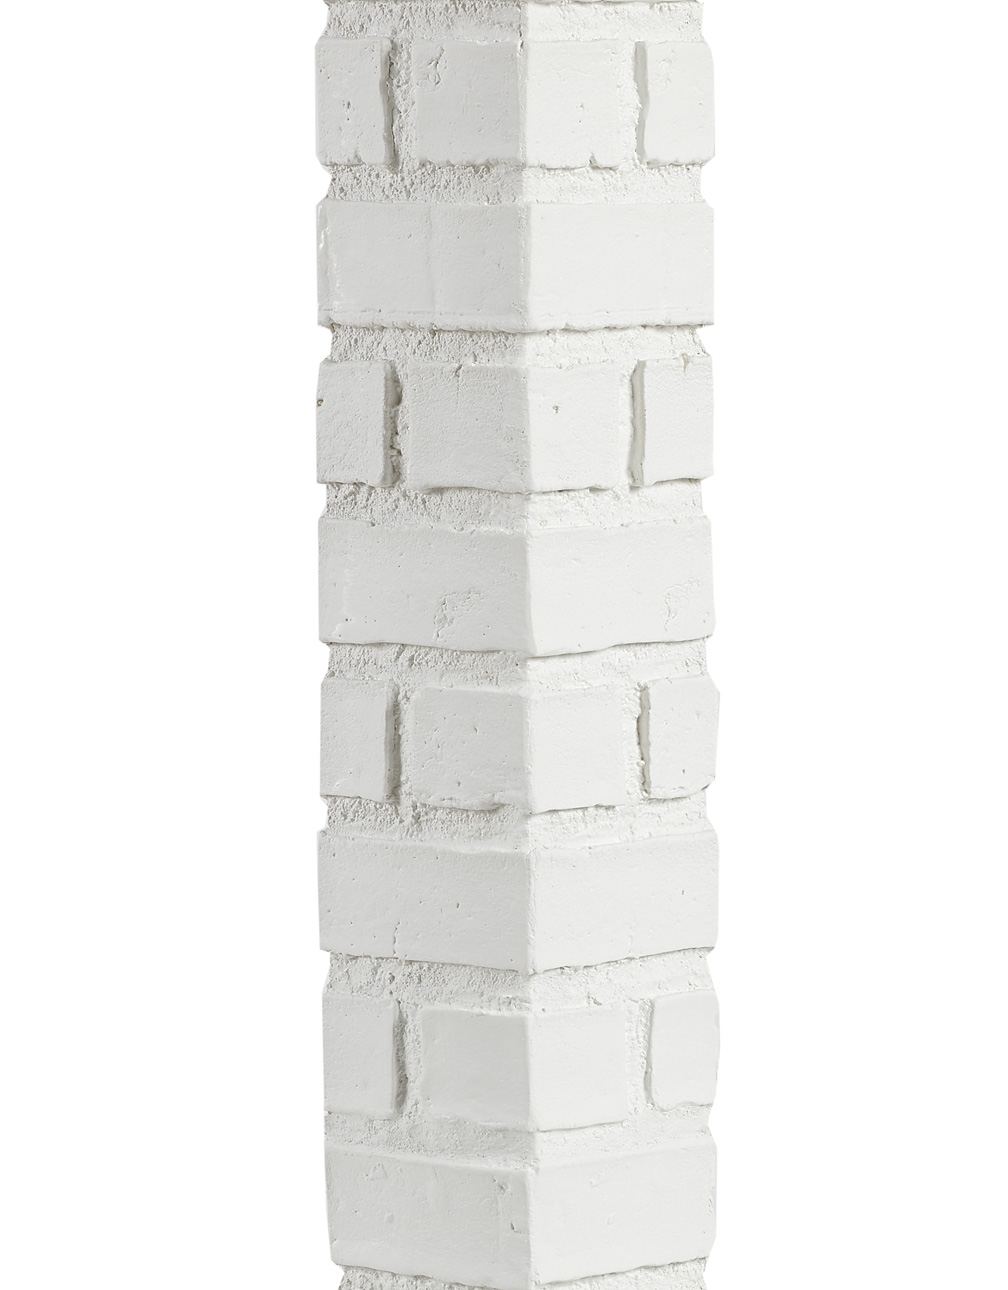 Brick Historic Architectural Corner - White